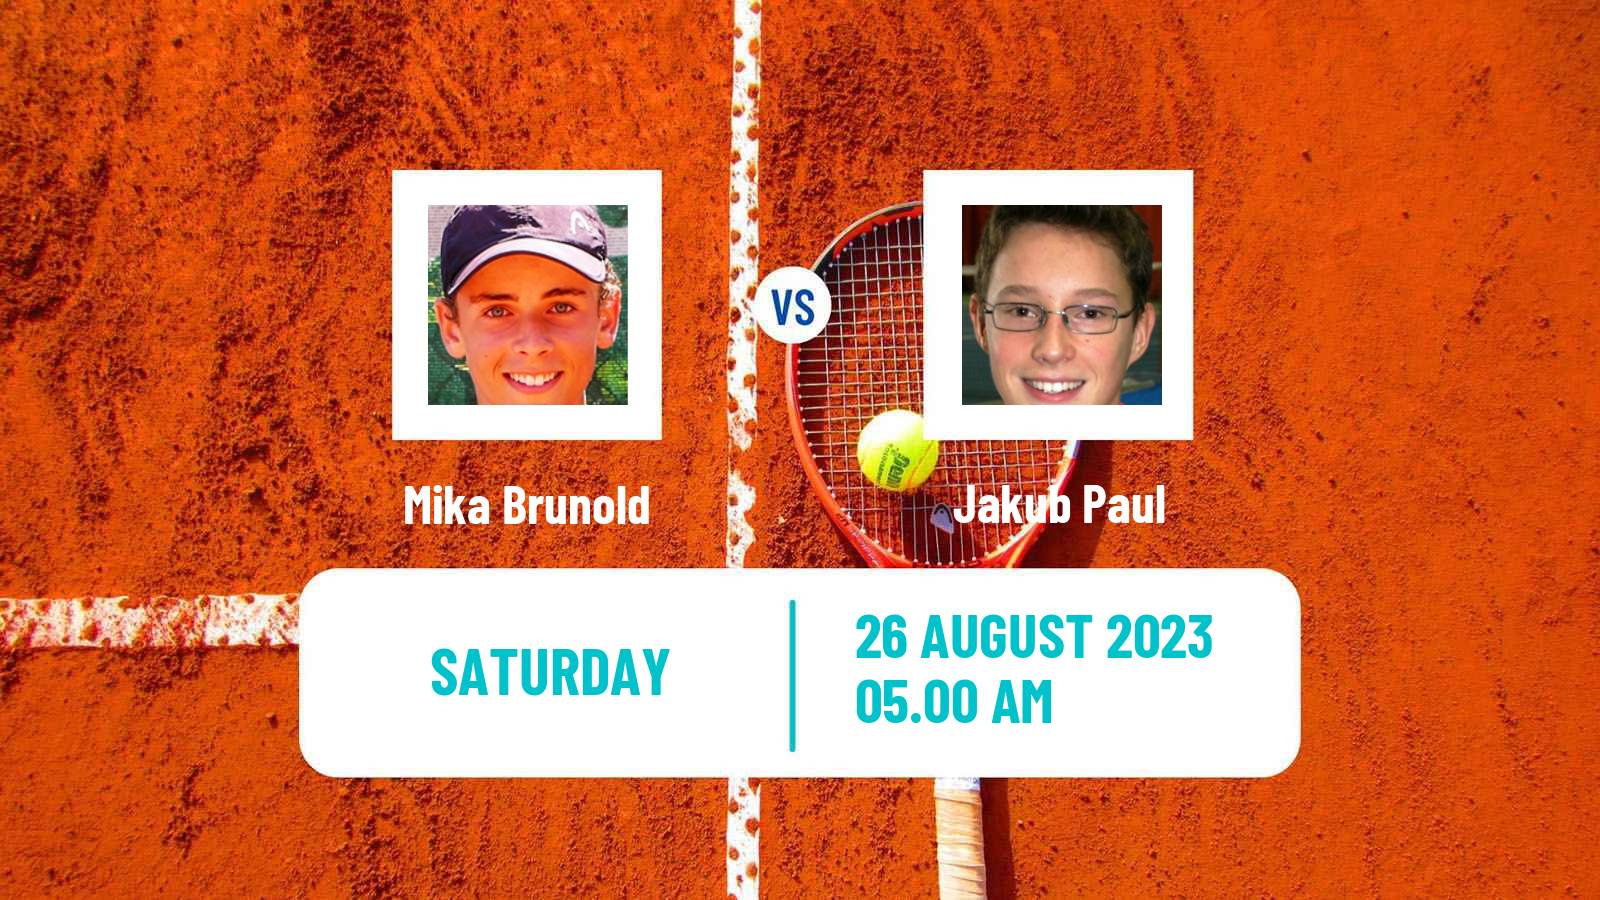 Tennis ITF M15 Caslano Men Mika Brunold - Jakub Paul